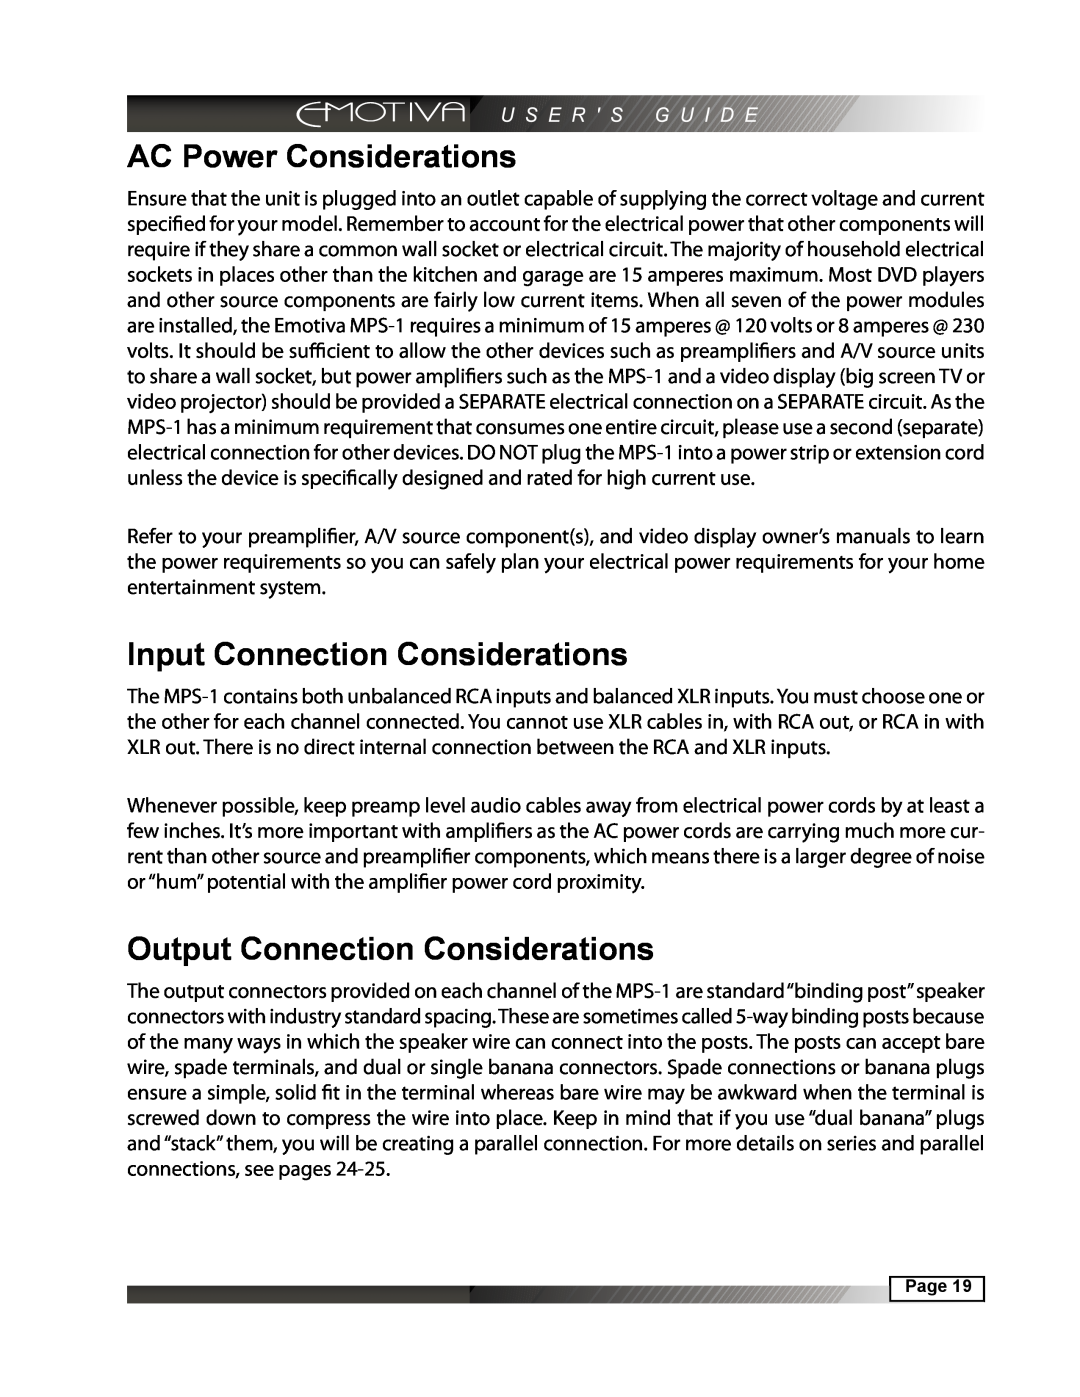 Emotiva MPS-1 manual AC Power Considerations, Input Connection Considerations, Output Connection Considerations 